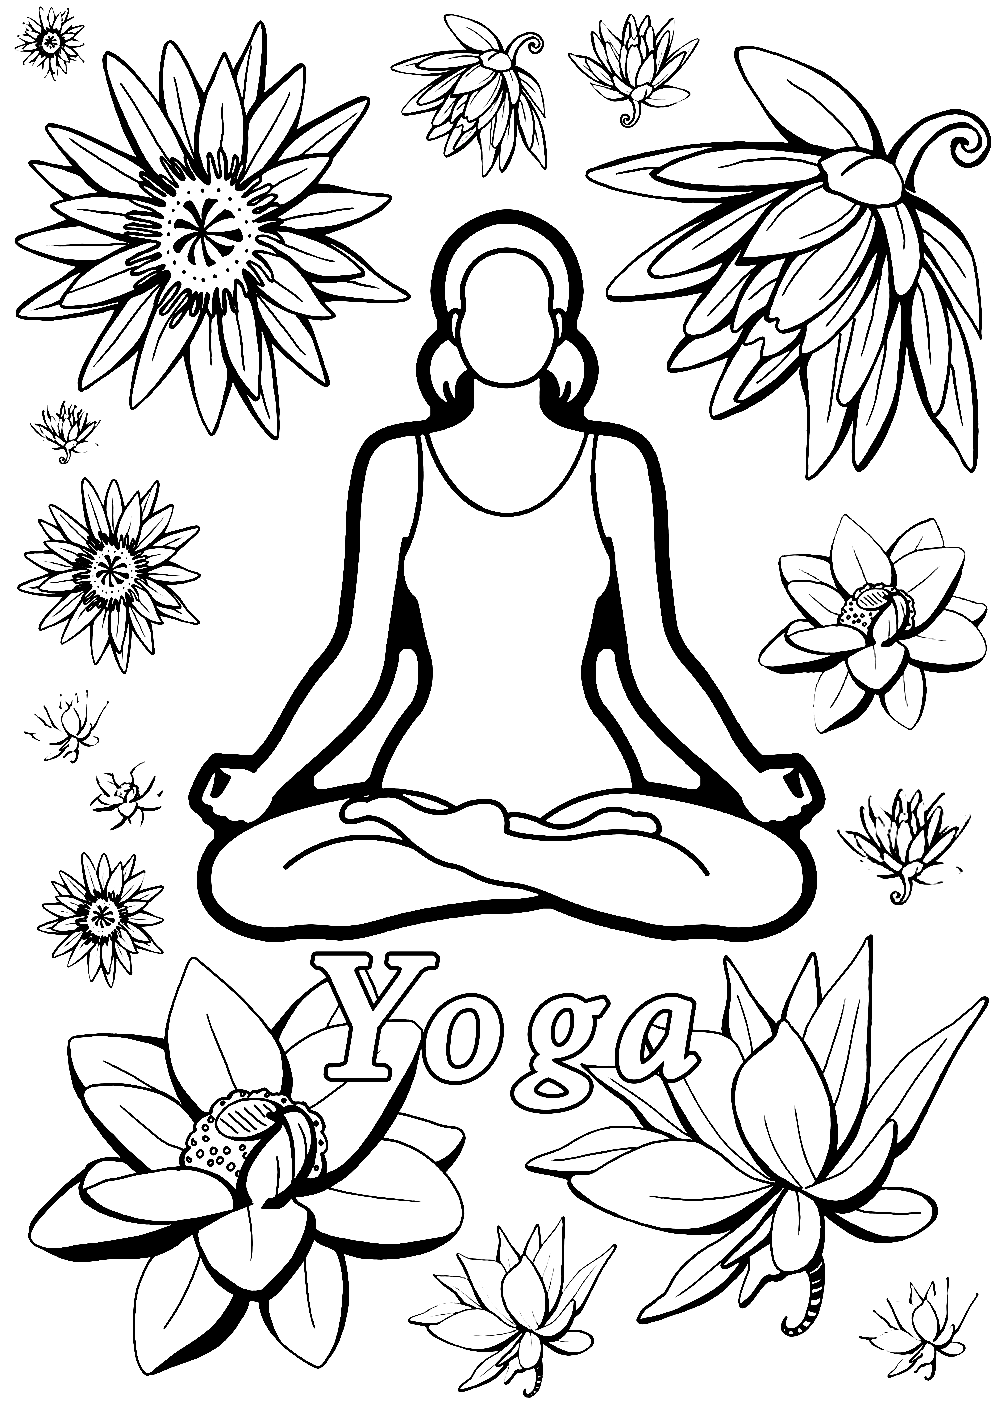 Раскраска йог. Раскраска медитация. Медитация рисунок. Йога раскраска. Раскраска для спокойствия.